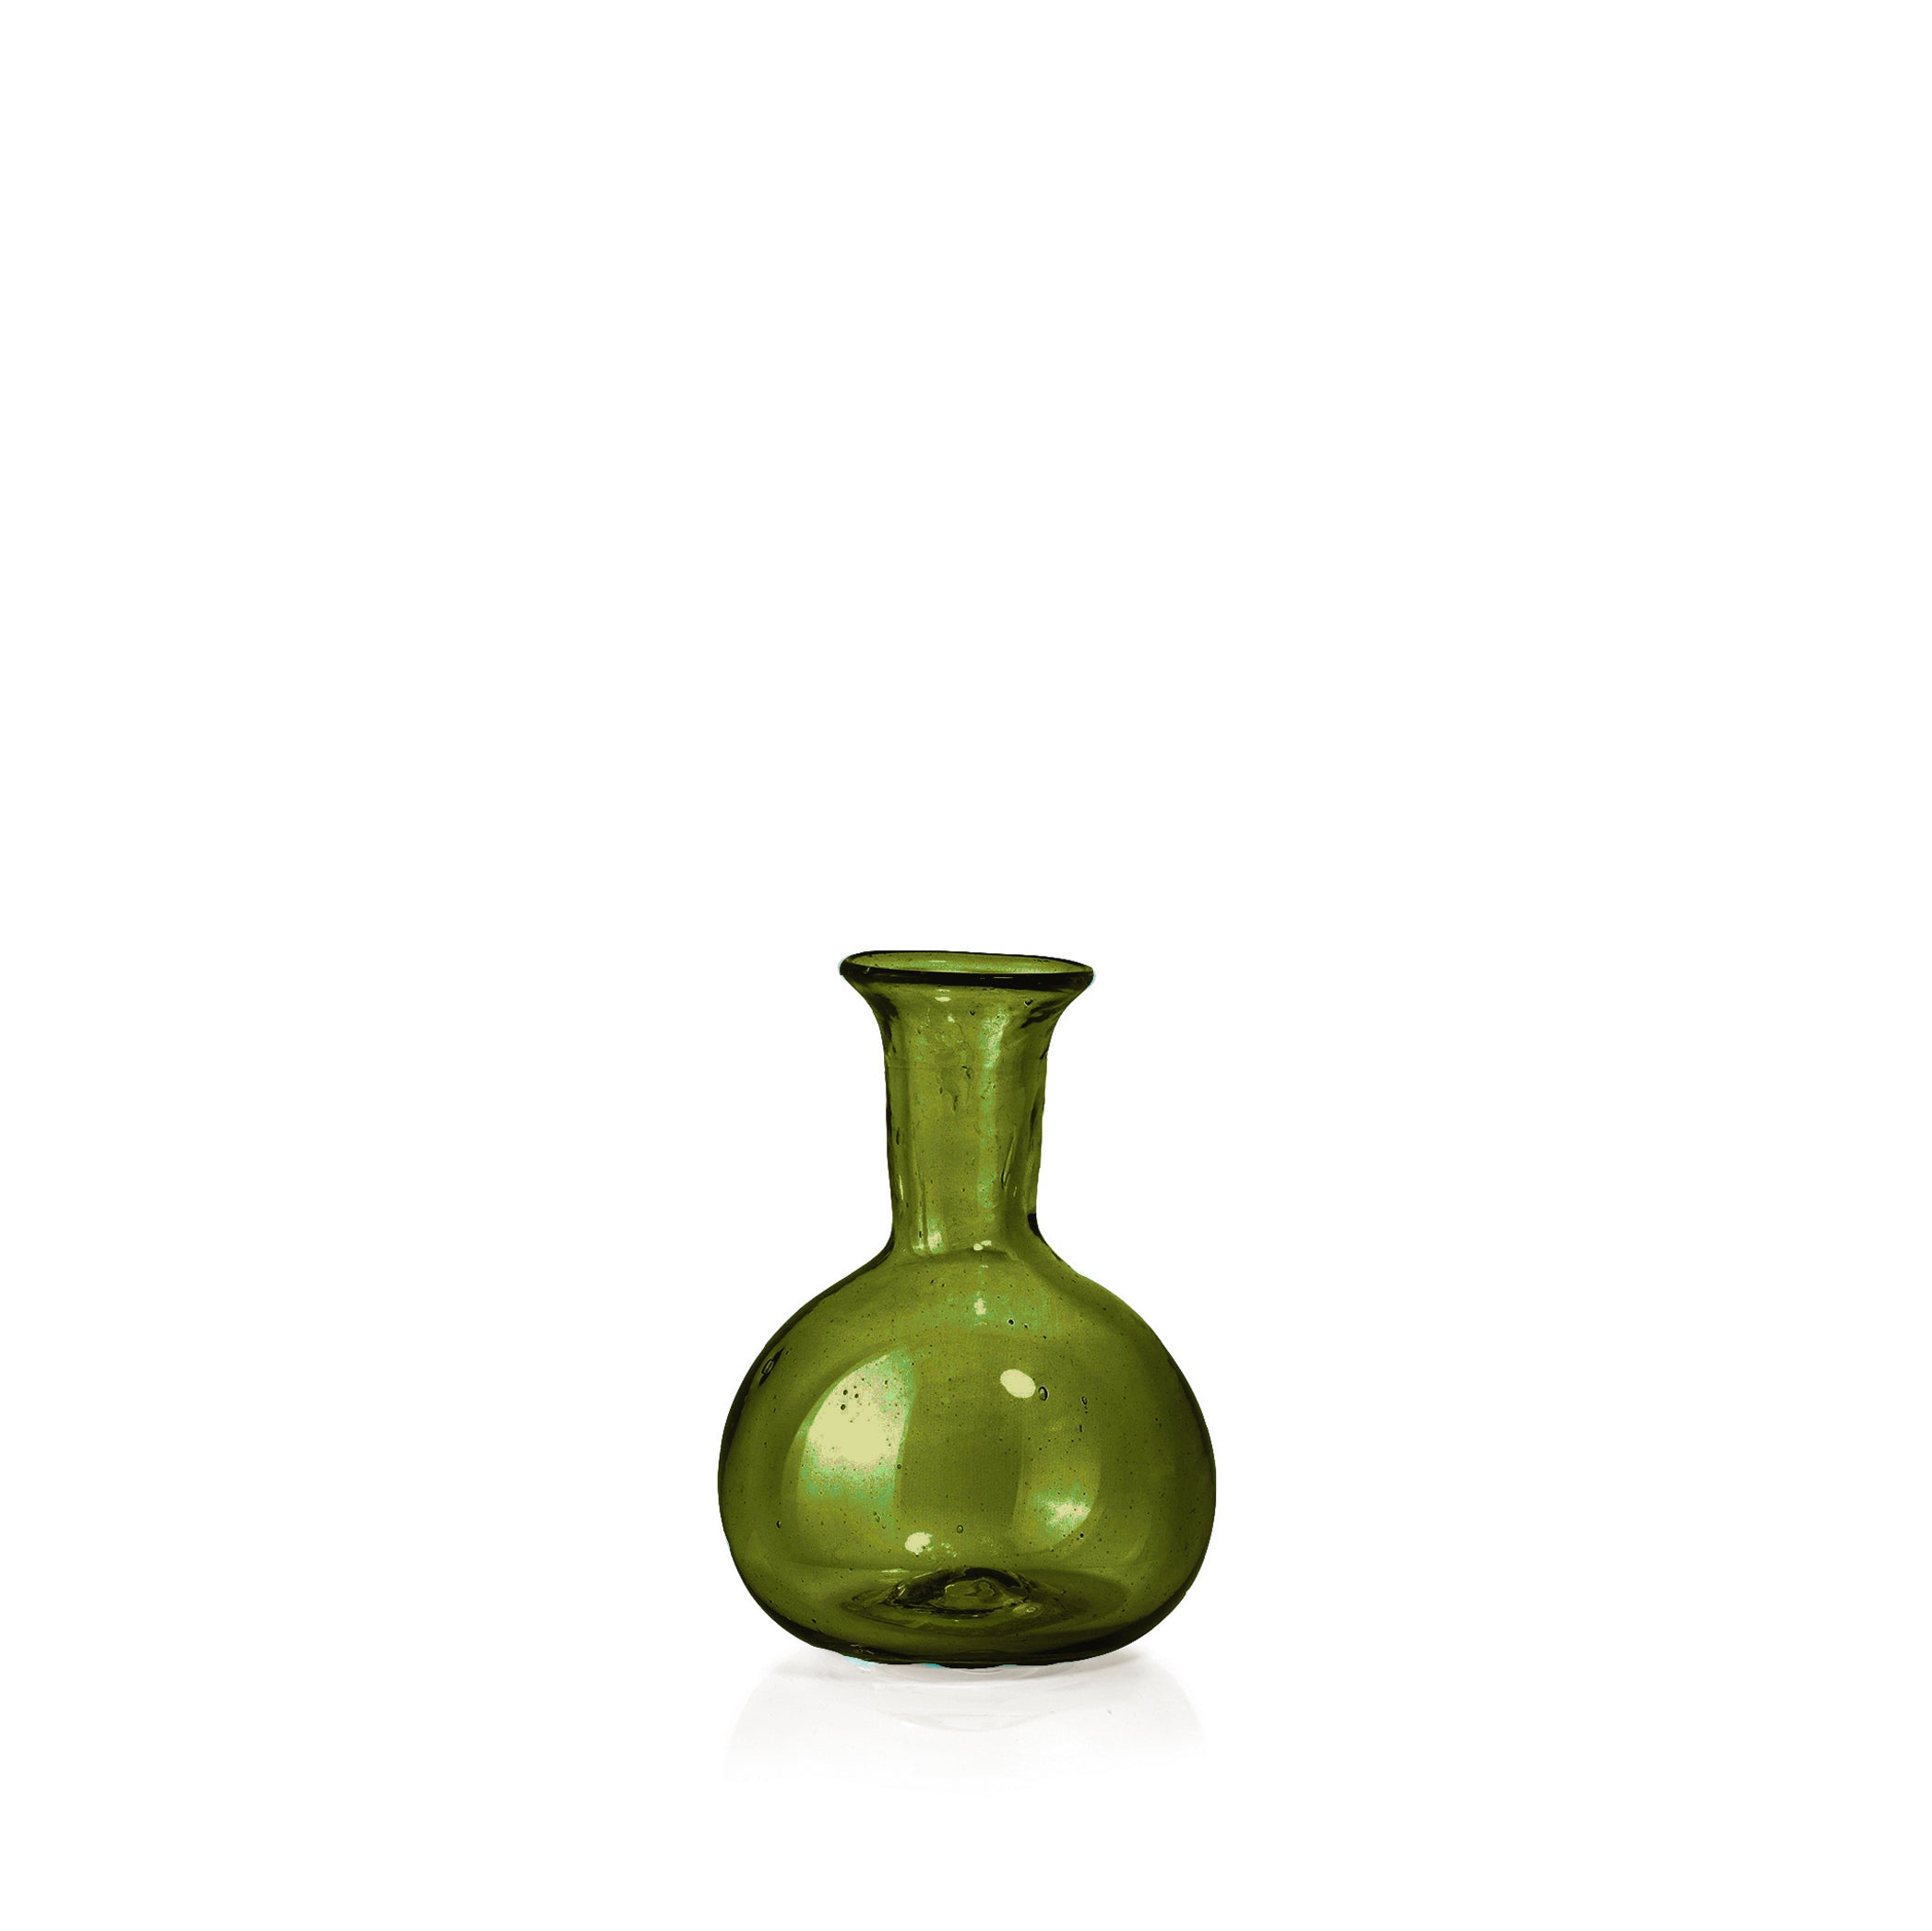 Handblown Small Round Bud Vase in Olive Green, 9cm